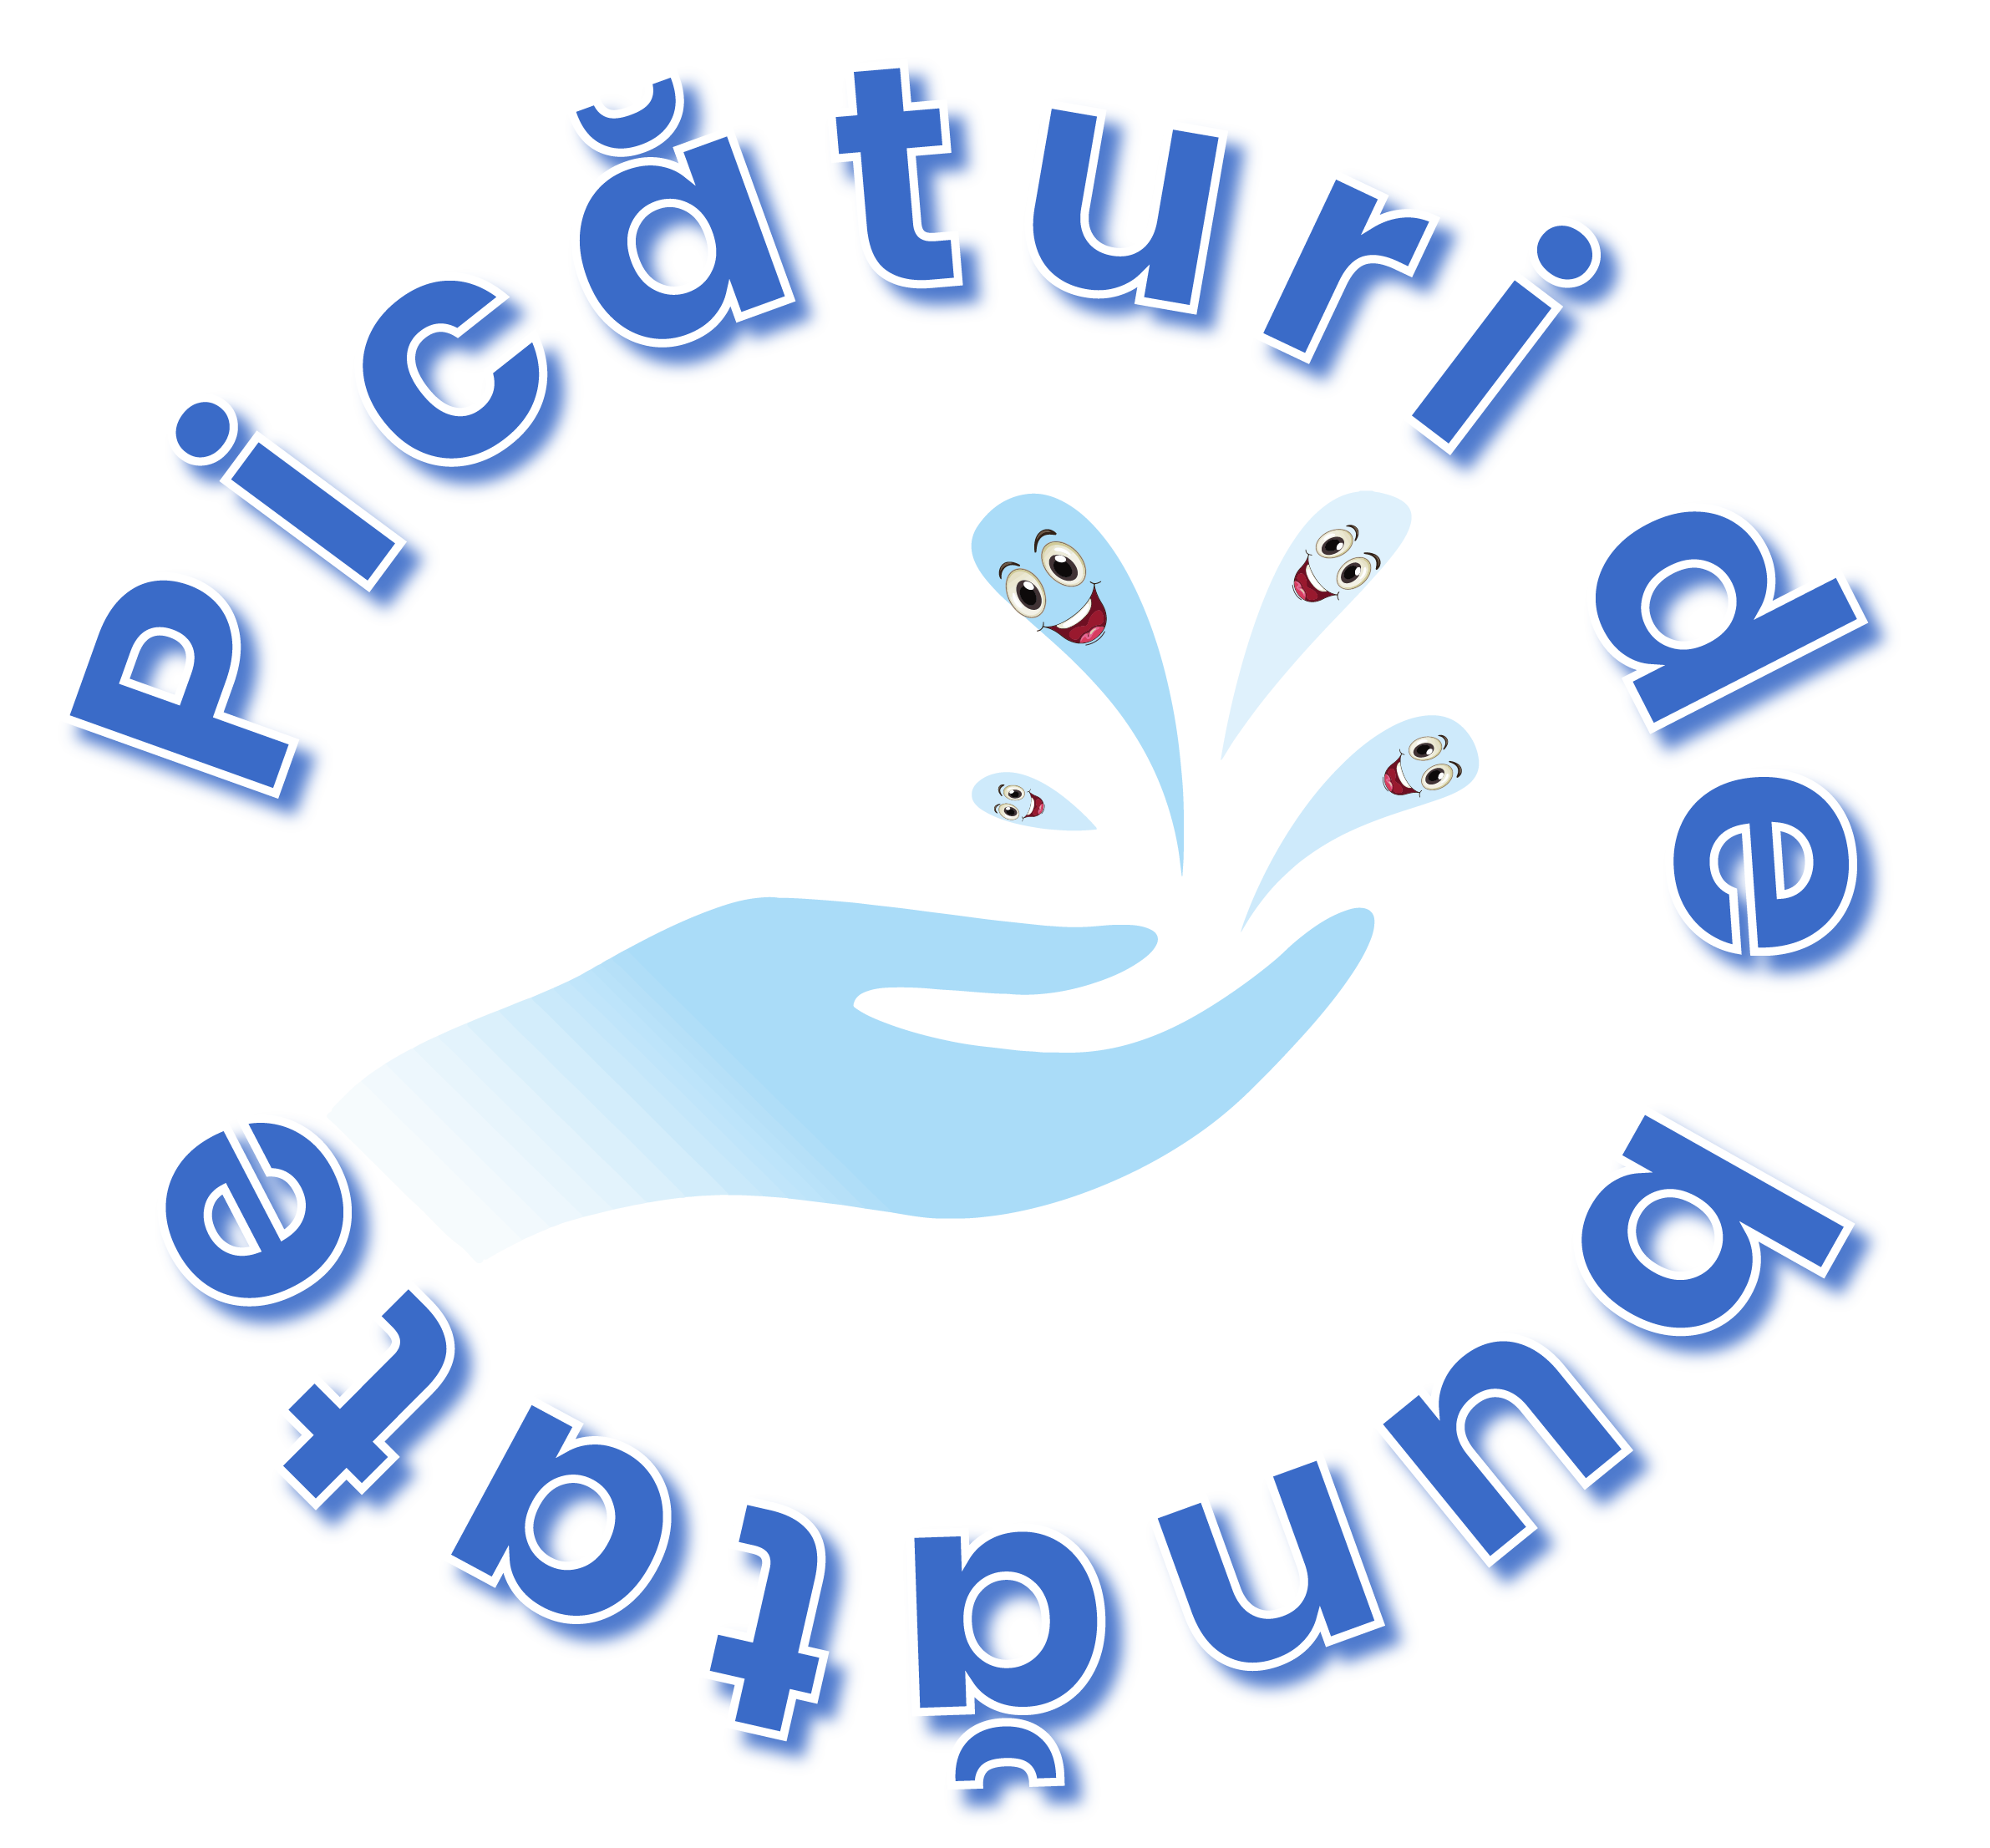 PICATURI DE BUNATATE logo